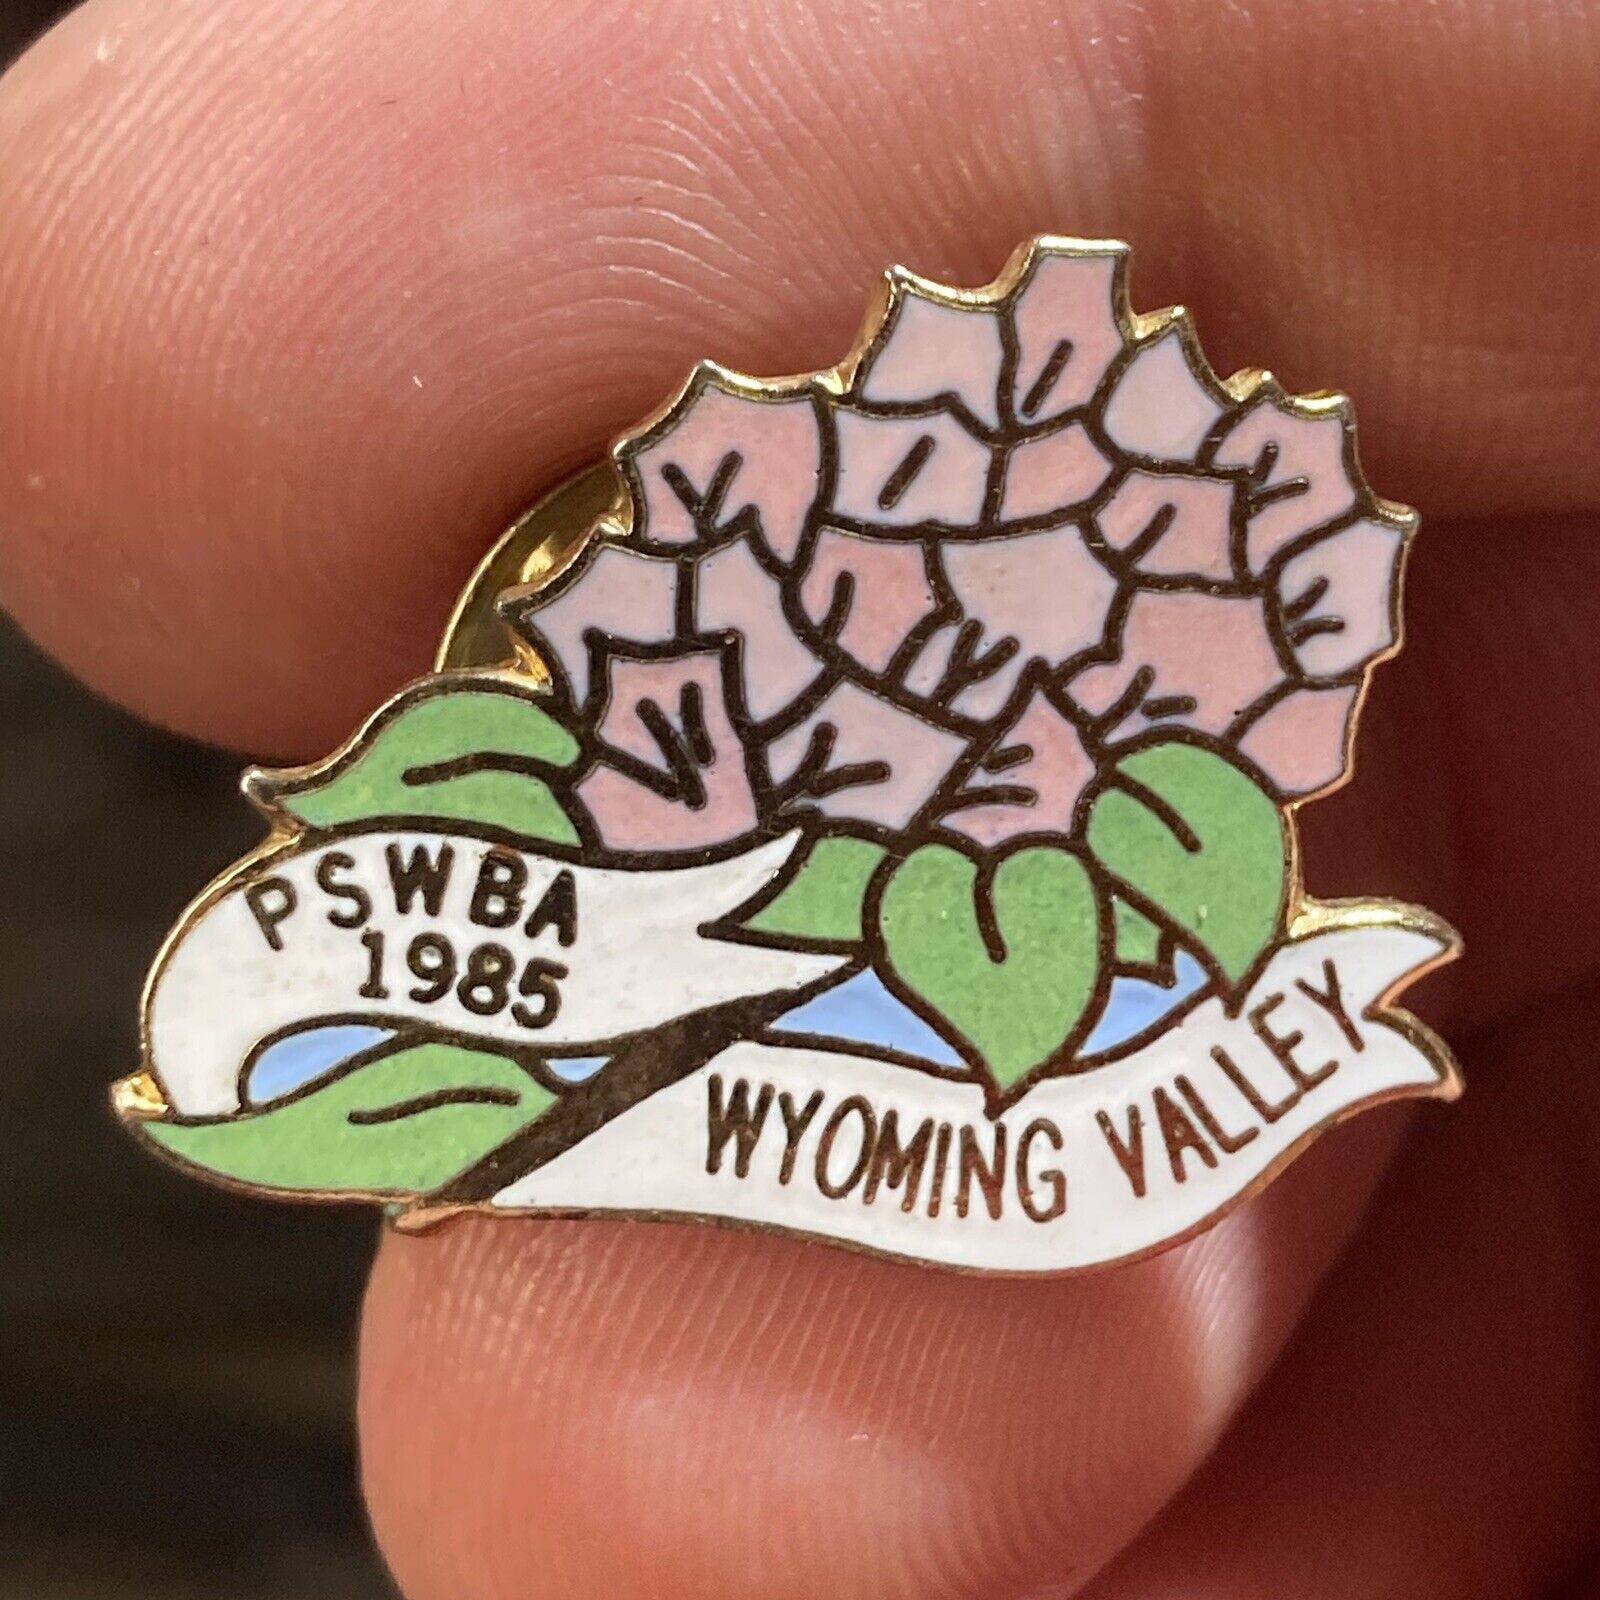 PSWBA Wyoming Valley Flowers Lapel Pin Hat Vest EUC K447